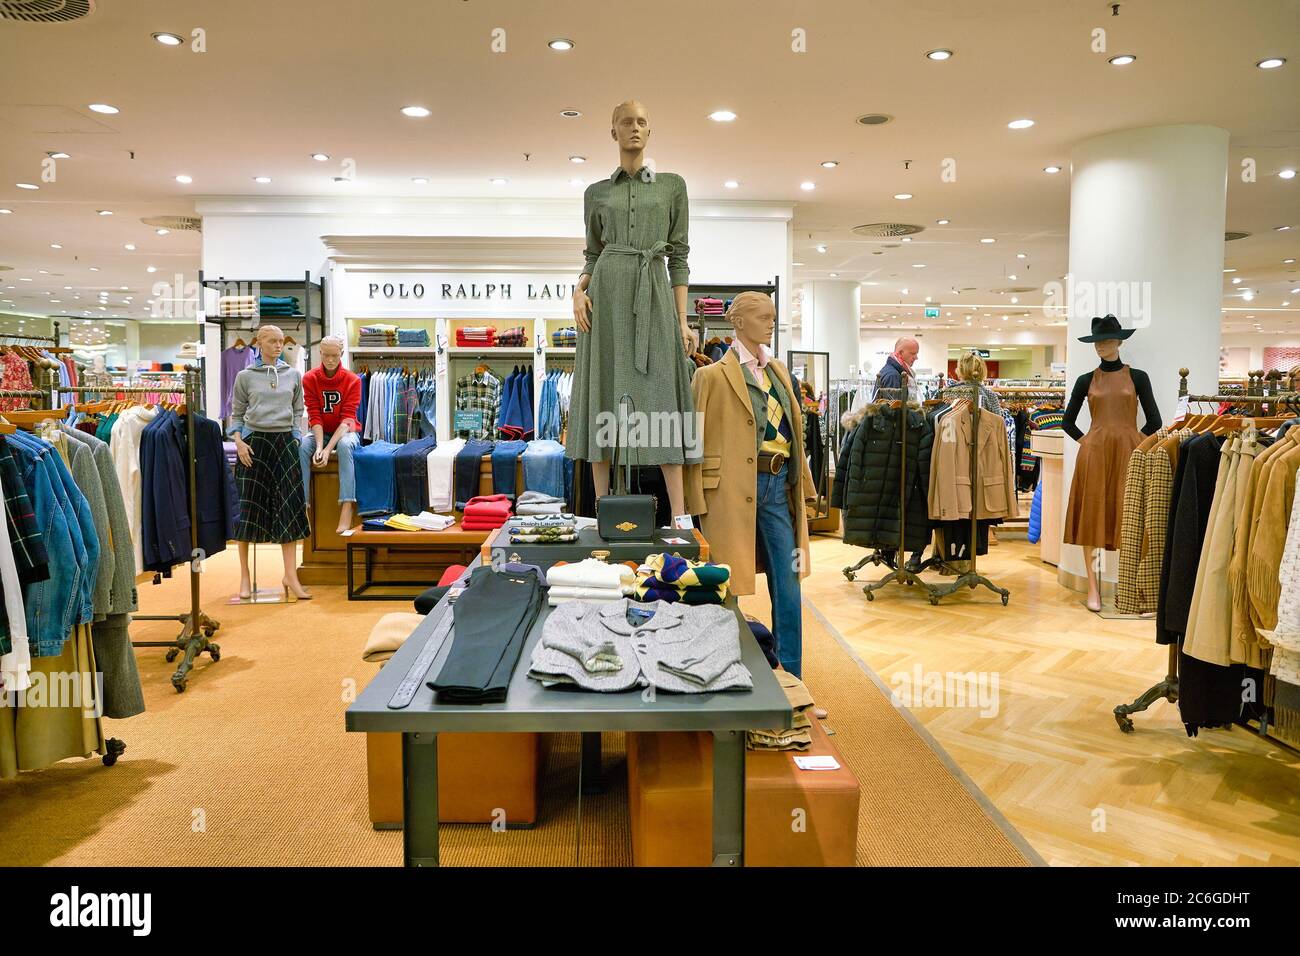 BERLIN, DEUTSCHLAND - CA. SEPTEMBER 2019: Polo Ralph Lauren Kleidung im  Kaufhaus des Westens (KaDeWe) in Berlin Stockfotografie - Alamy